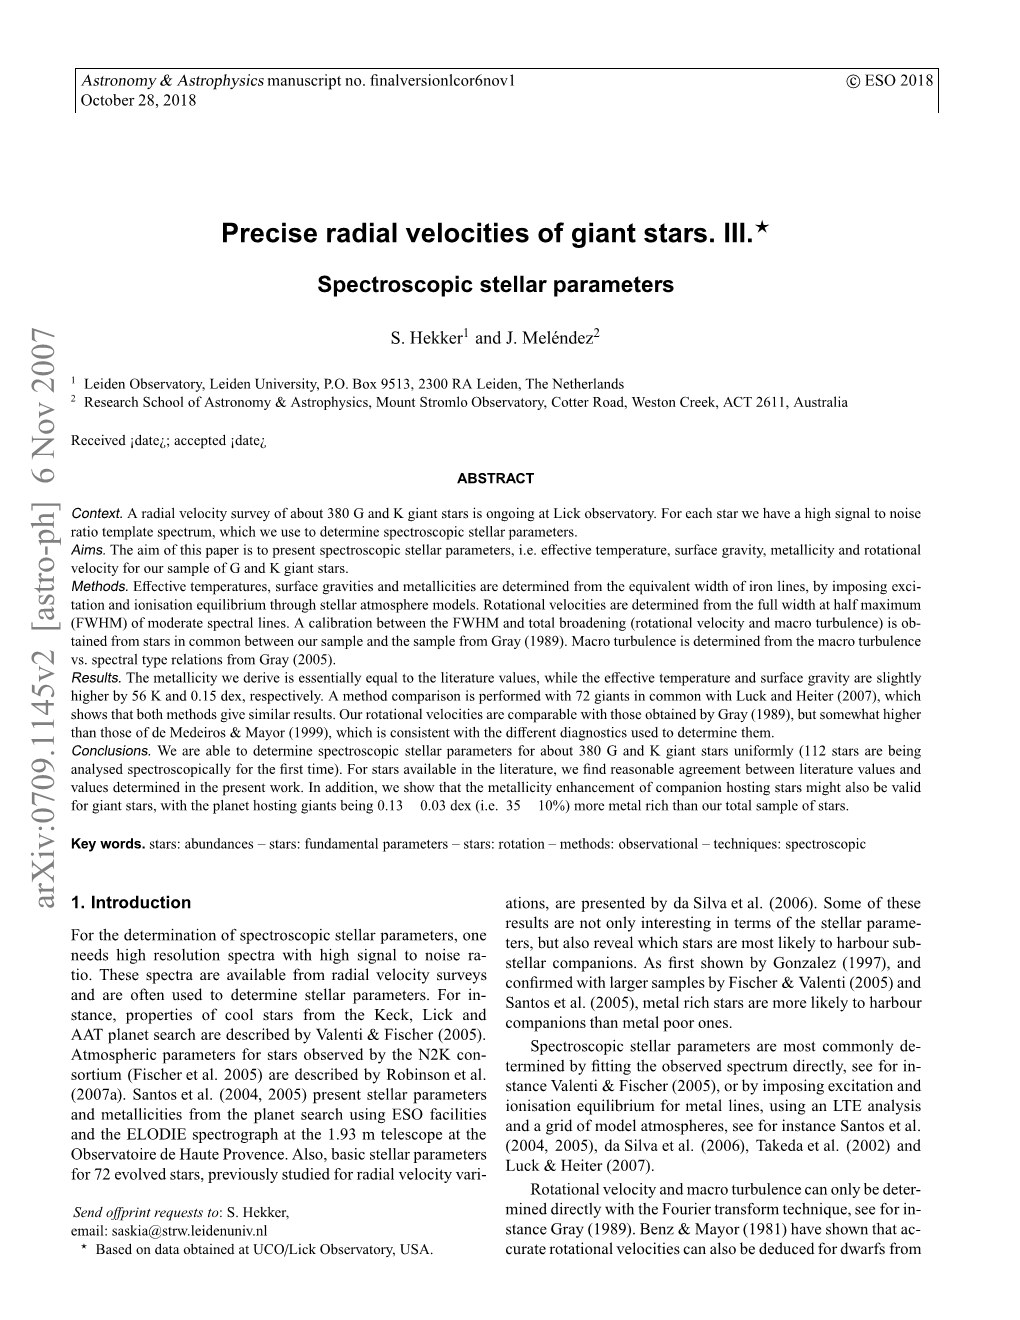 Precise Radial Velocities of Giant Stars. III. Spectroscopic Stellar Parameters